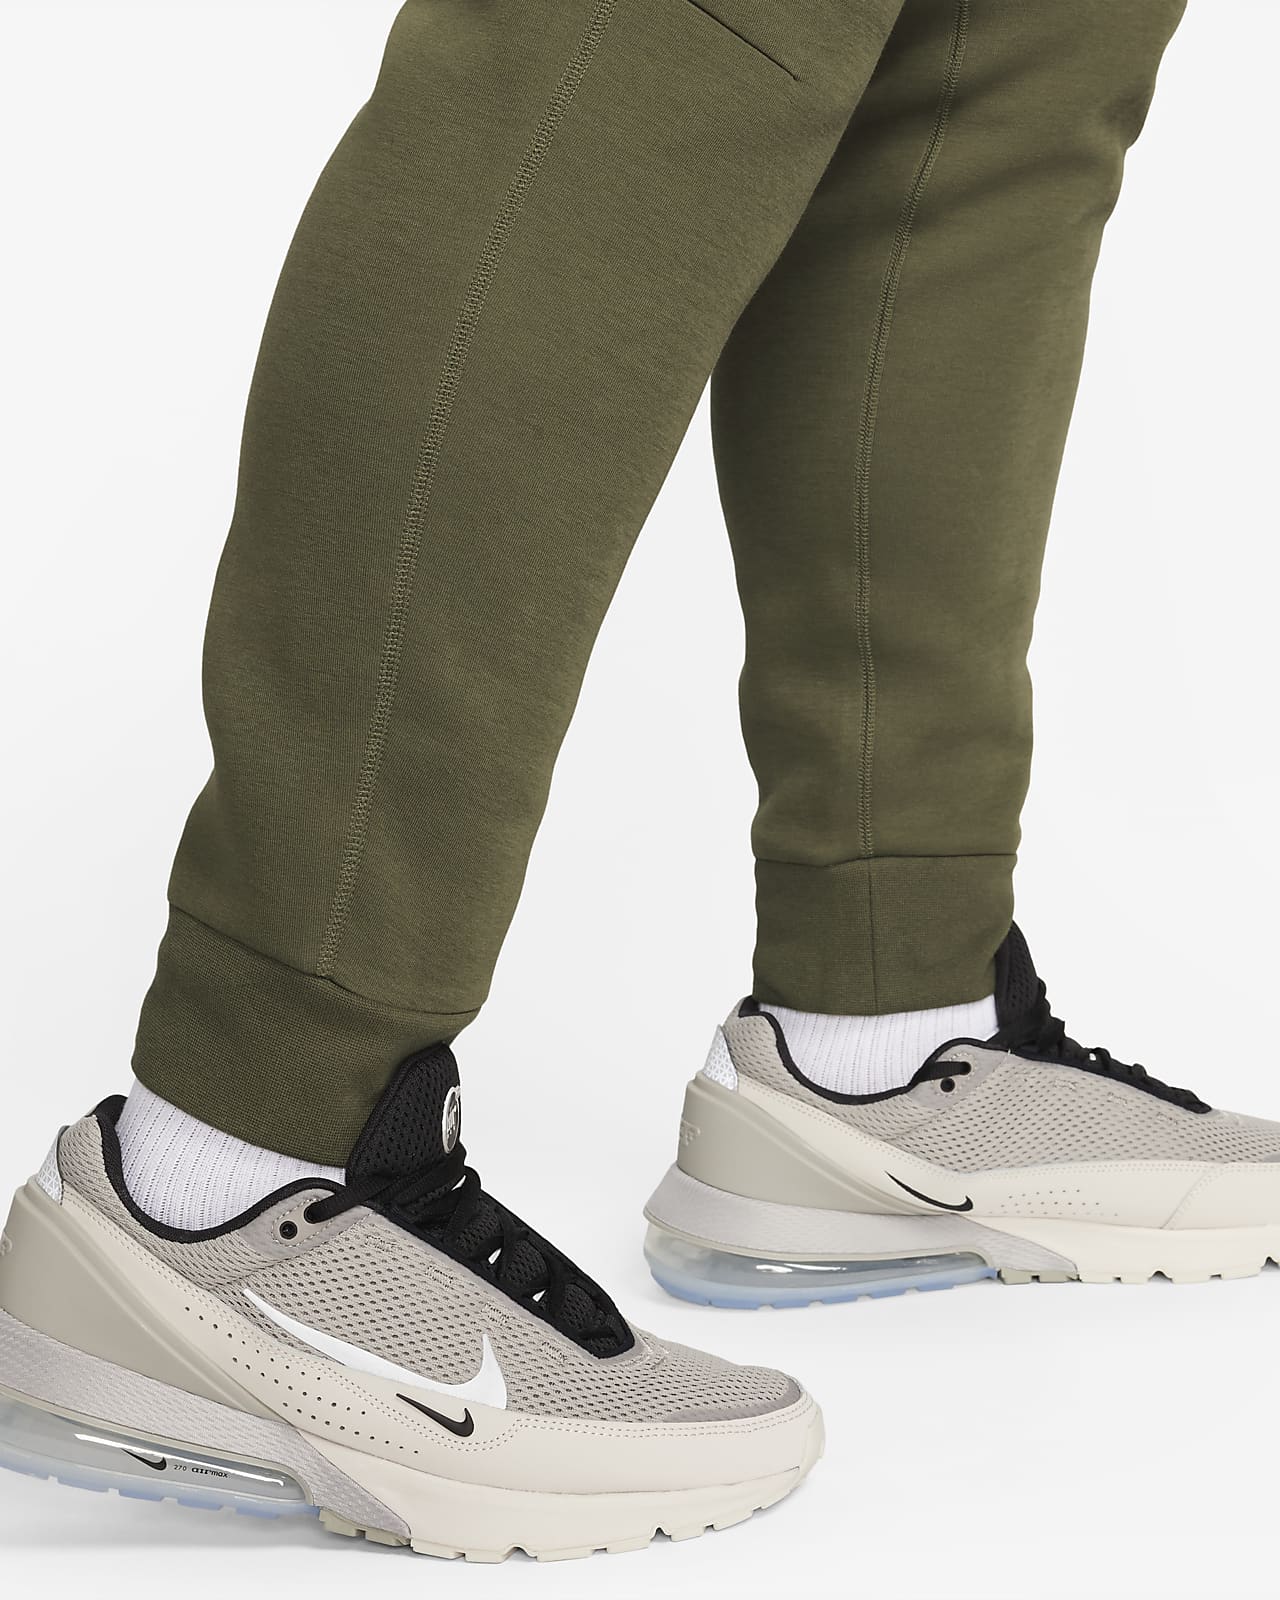 Pantalon de jogging Nike Sportswear Air Max pour Homme